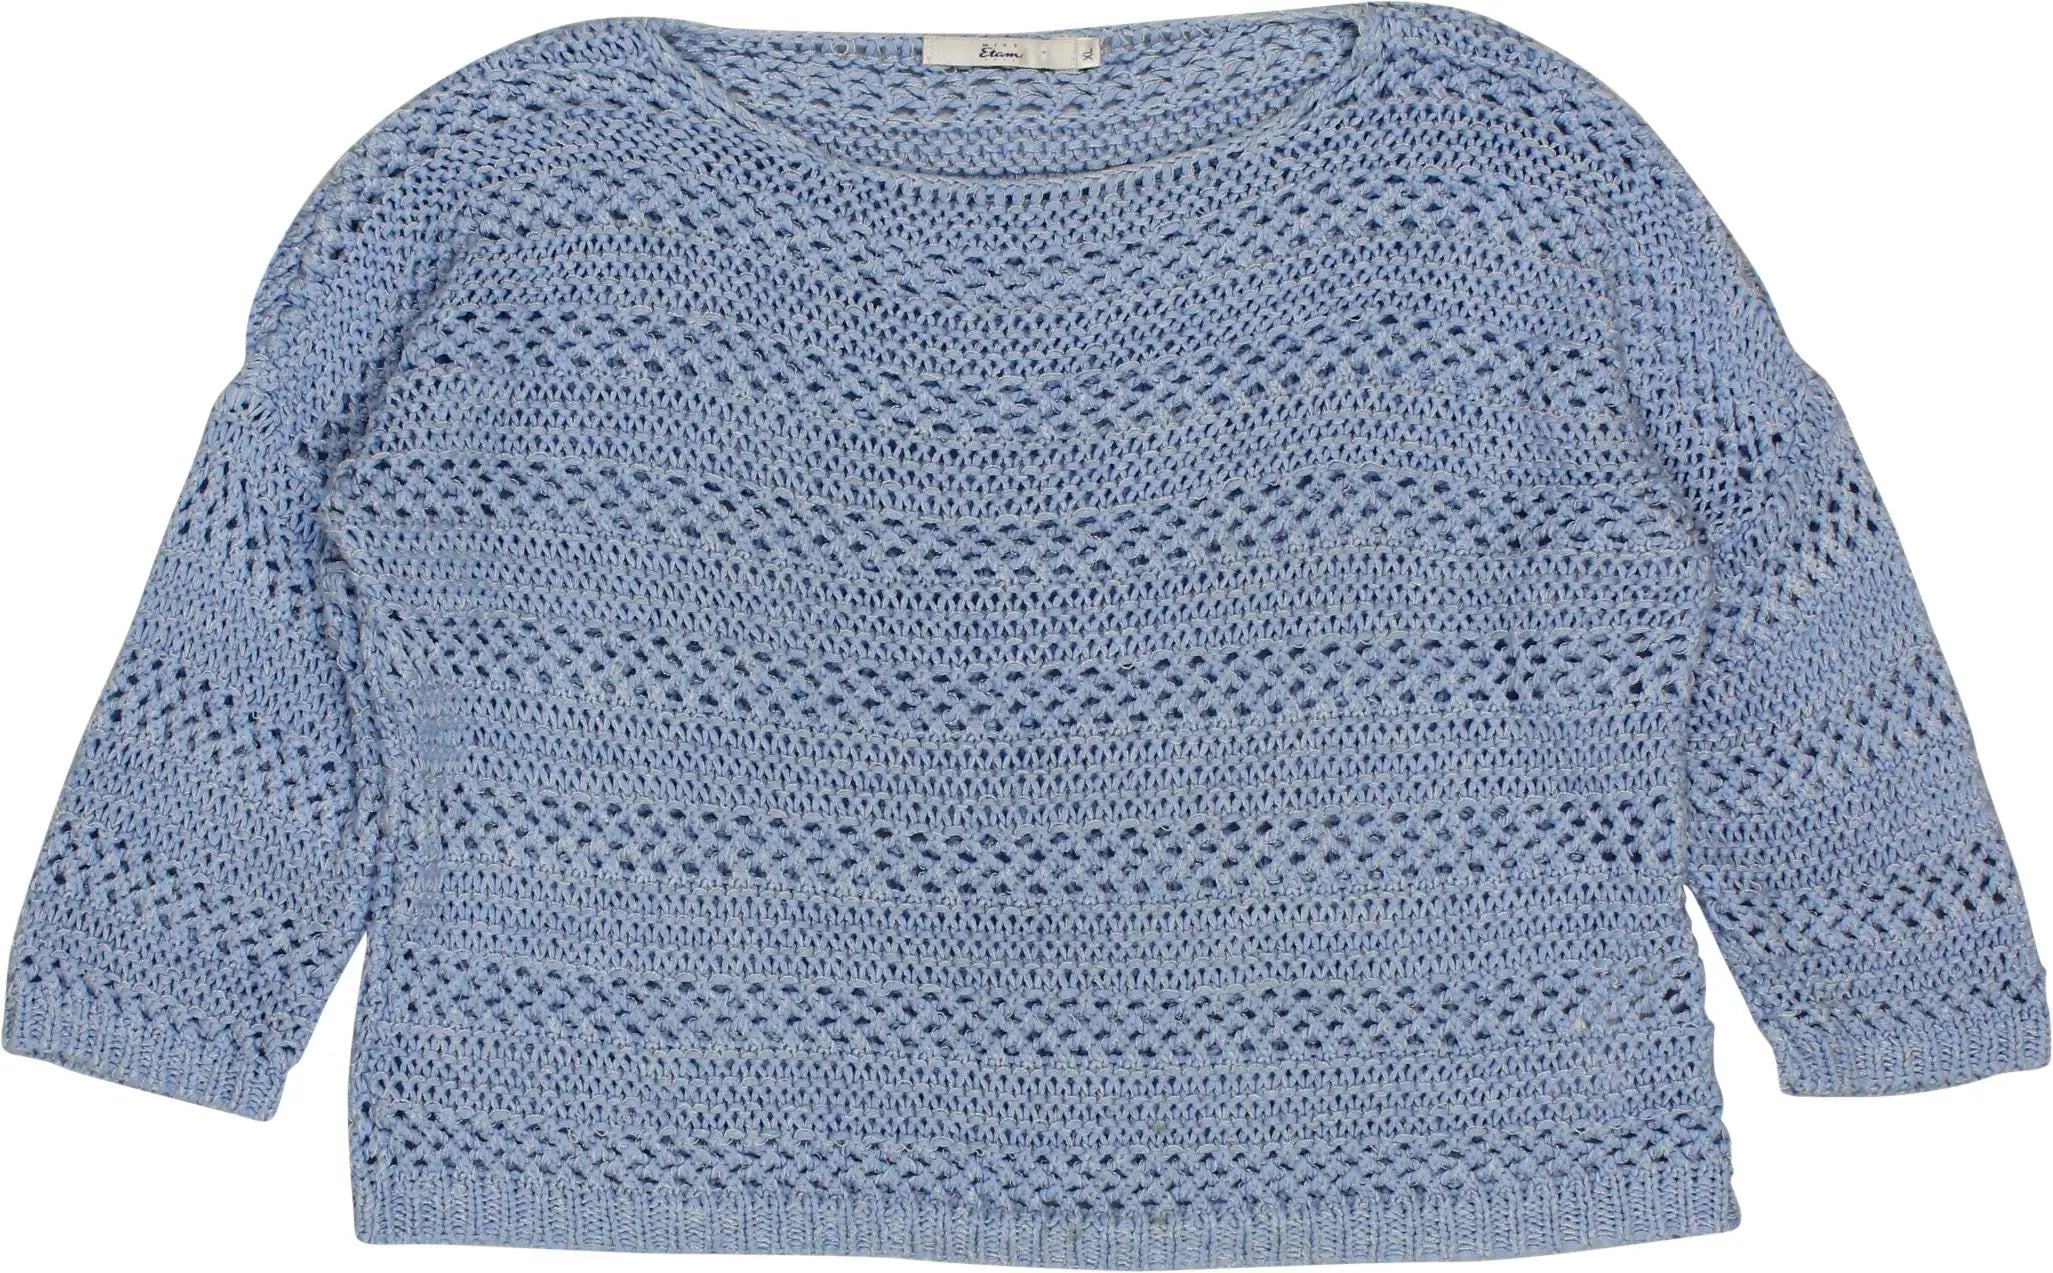 Miss Etam - Blue Crochet Top- ThriftTale.com - Vintage and second handclothing